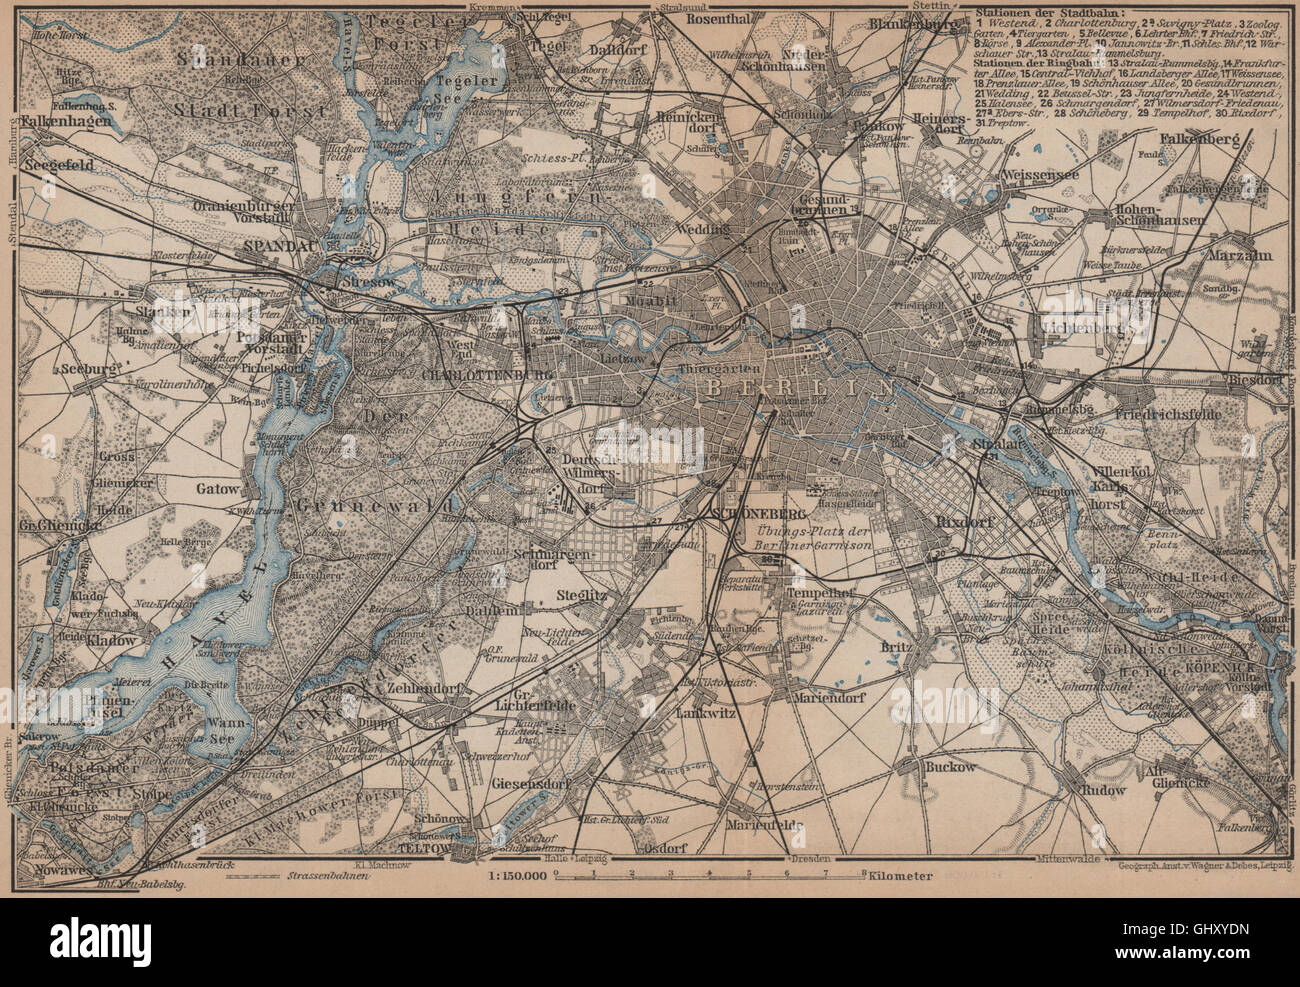 BERLIN & environs umgebung. Spandau Rixdorf Lichtenberg Zehlendorf, 1900 map Stock Photo